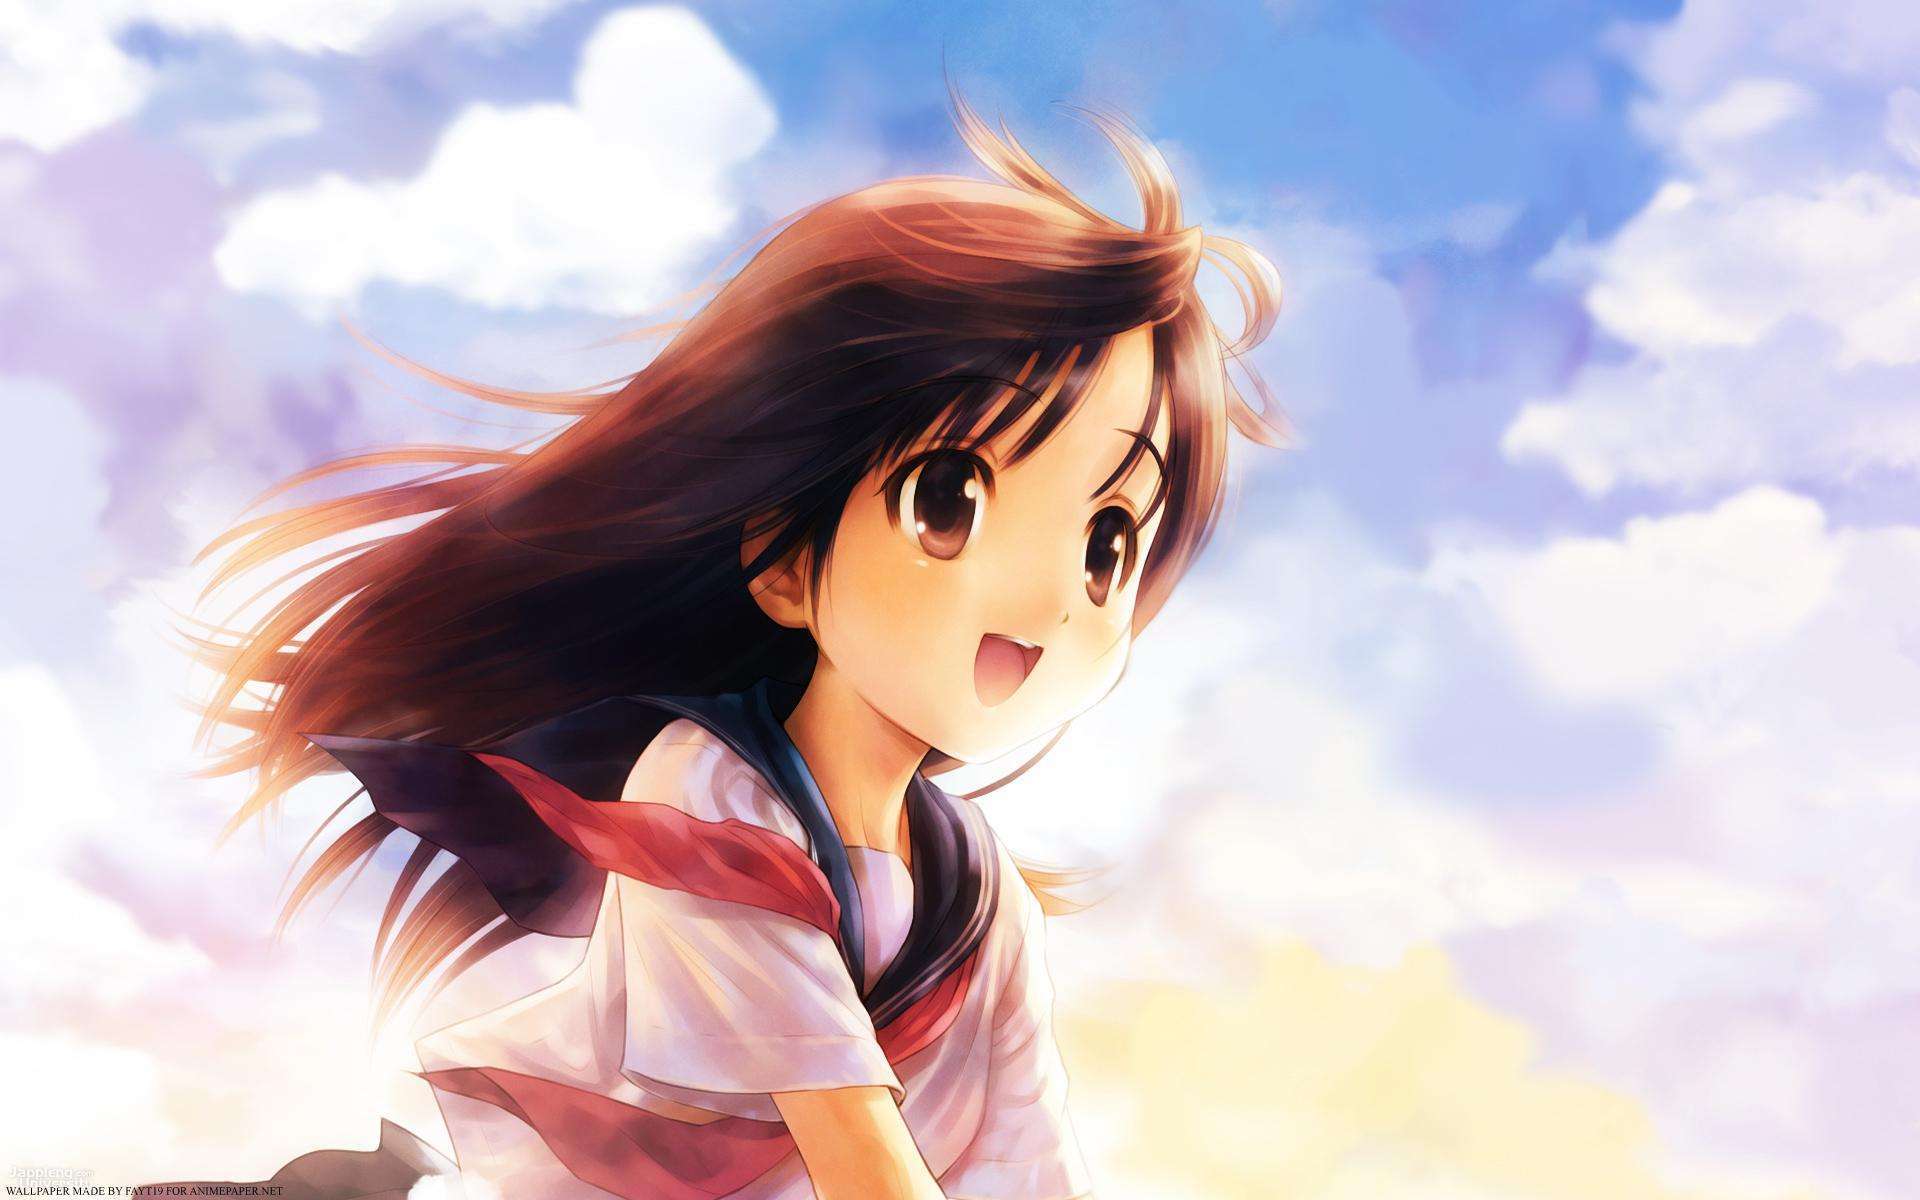 Cute-Anime-Wallpaper-HD-3-download-yoyo.jpg